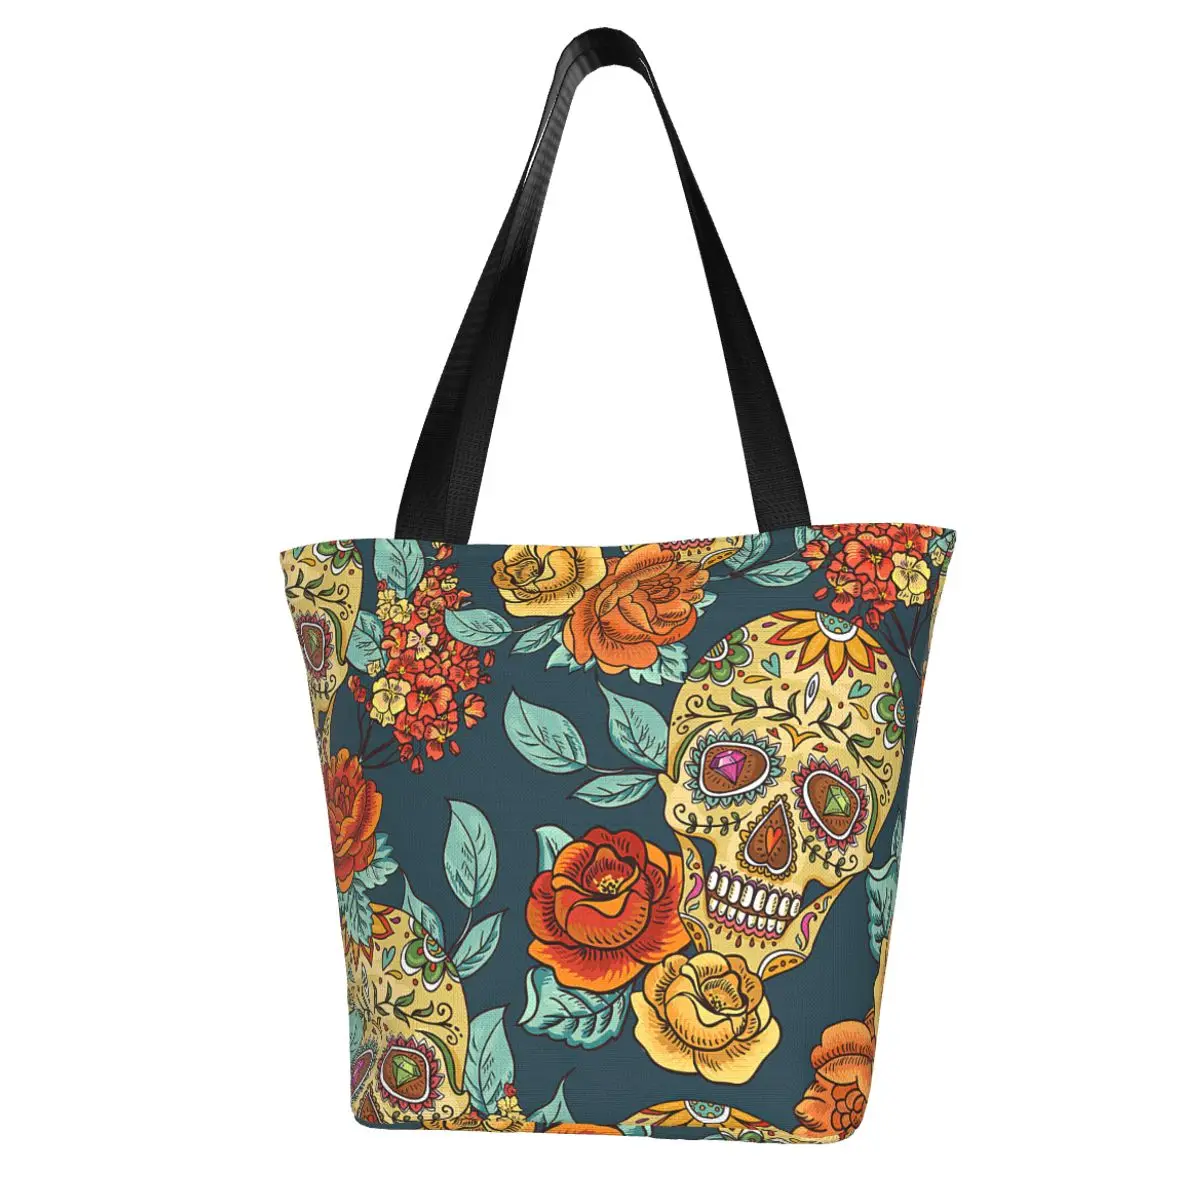 Mexican Skull Polyester outdoor girl handbag, woman shopping bag, shoulder bag, canvas bag, gift bag